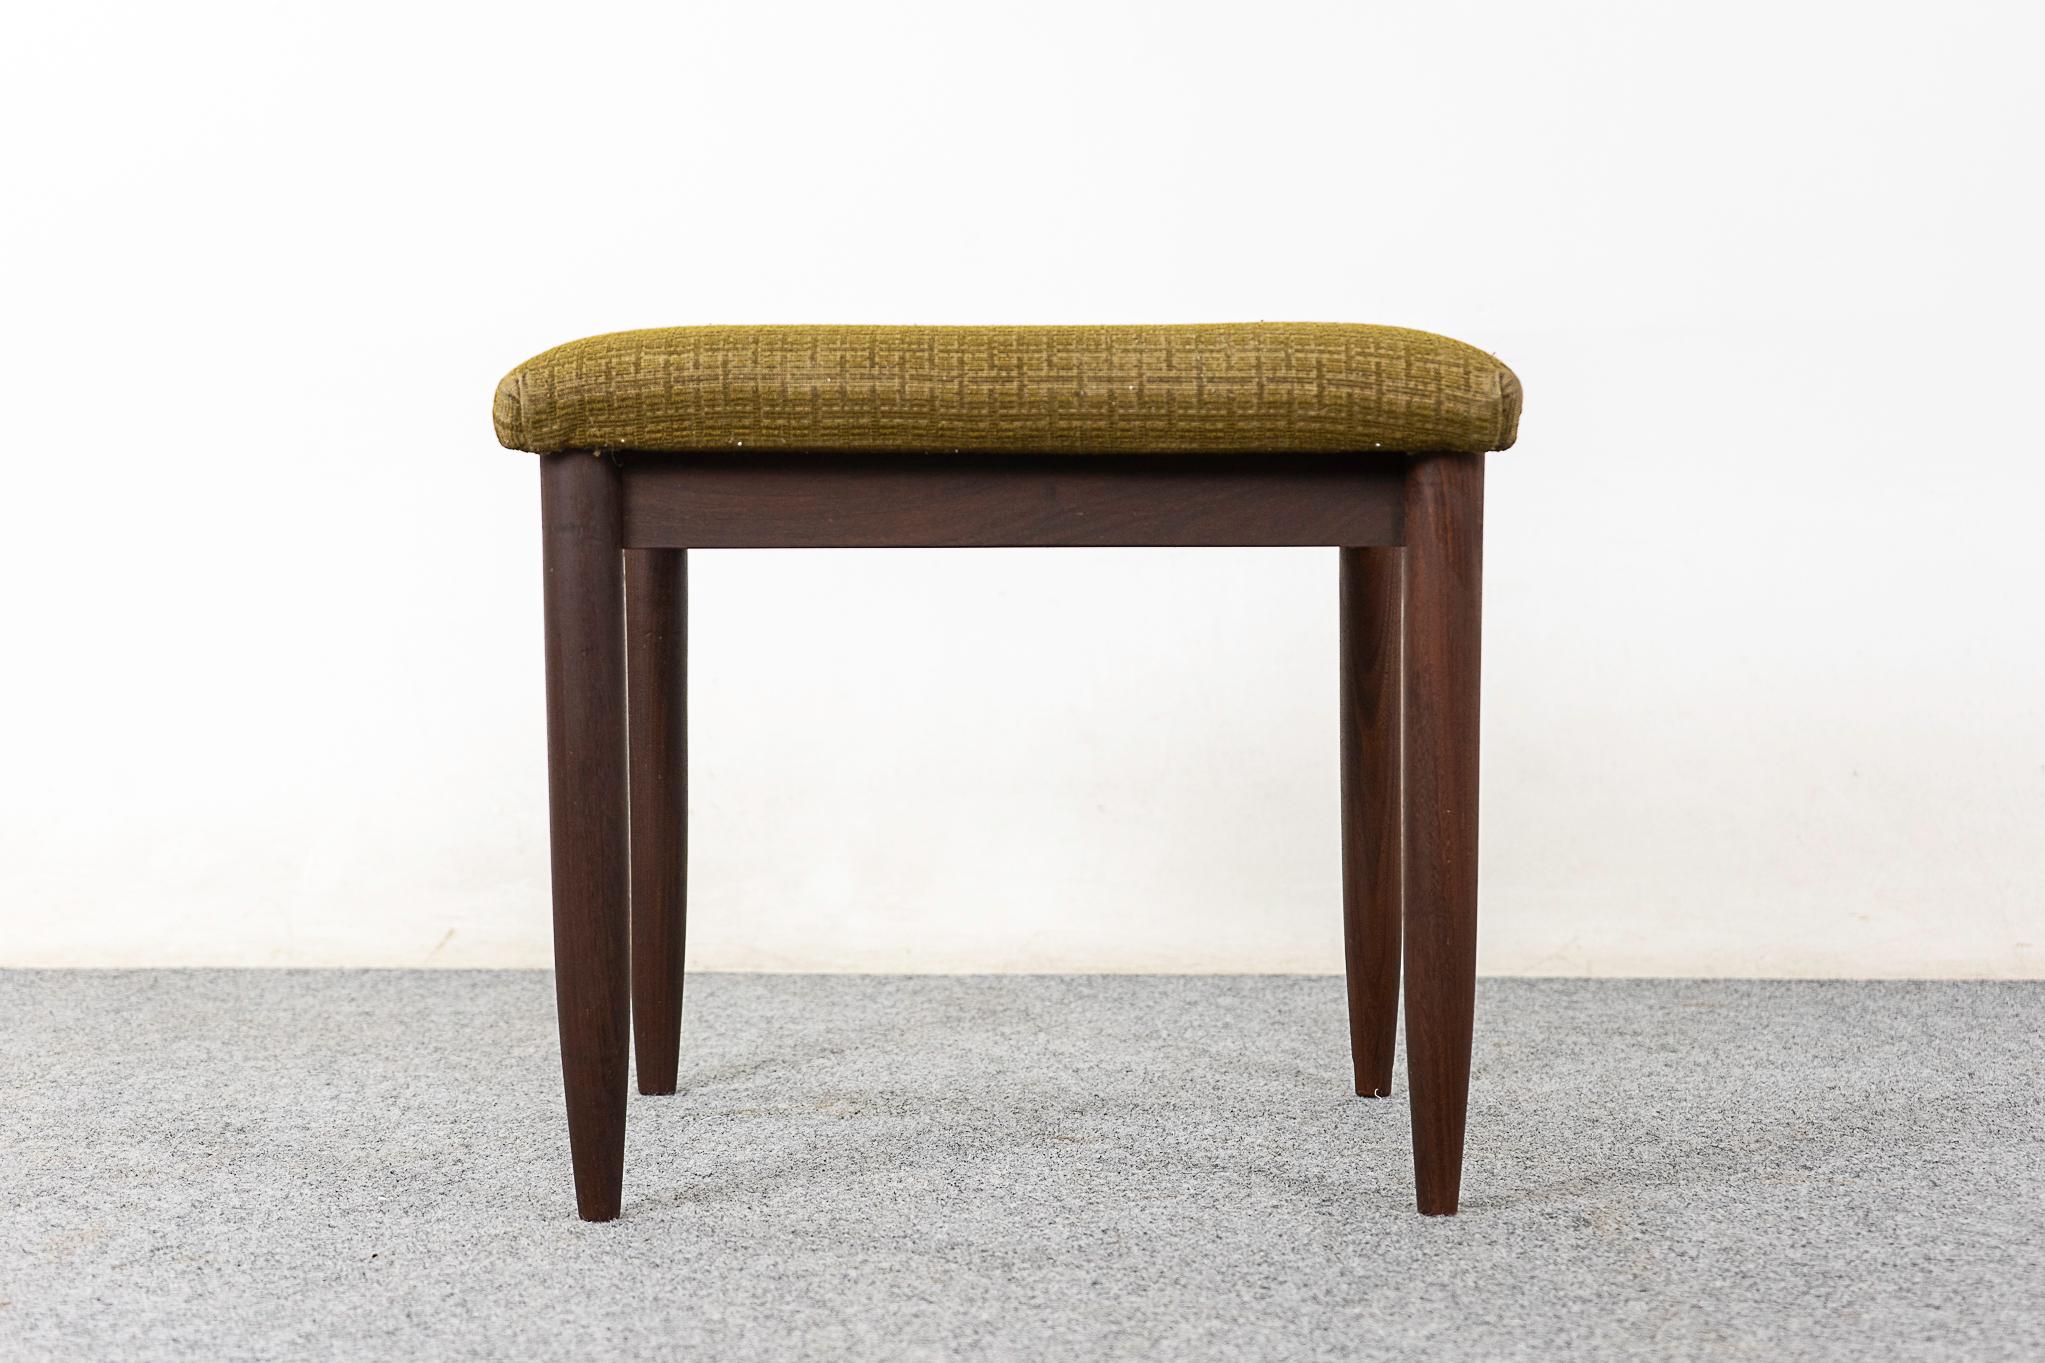 Teak Danish teak footstool, circa 1960's. Sleek conical legs and original upholstery with minor wear.